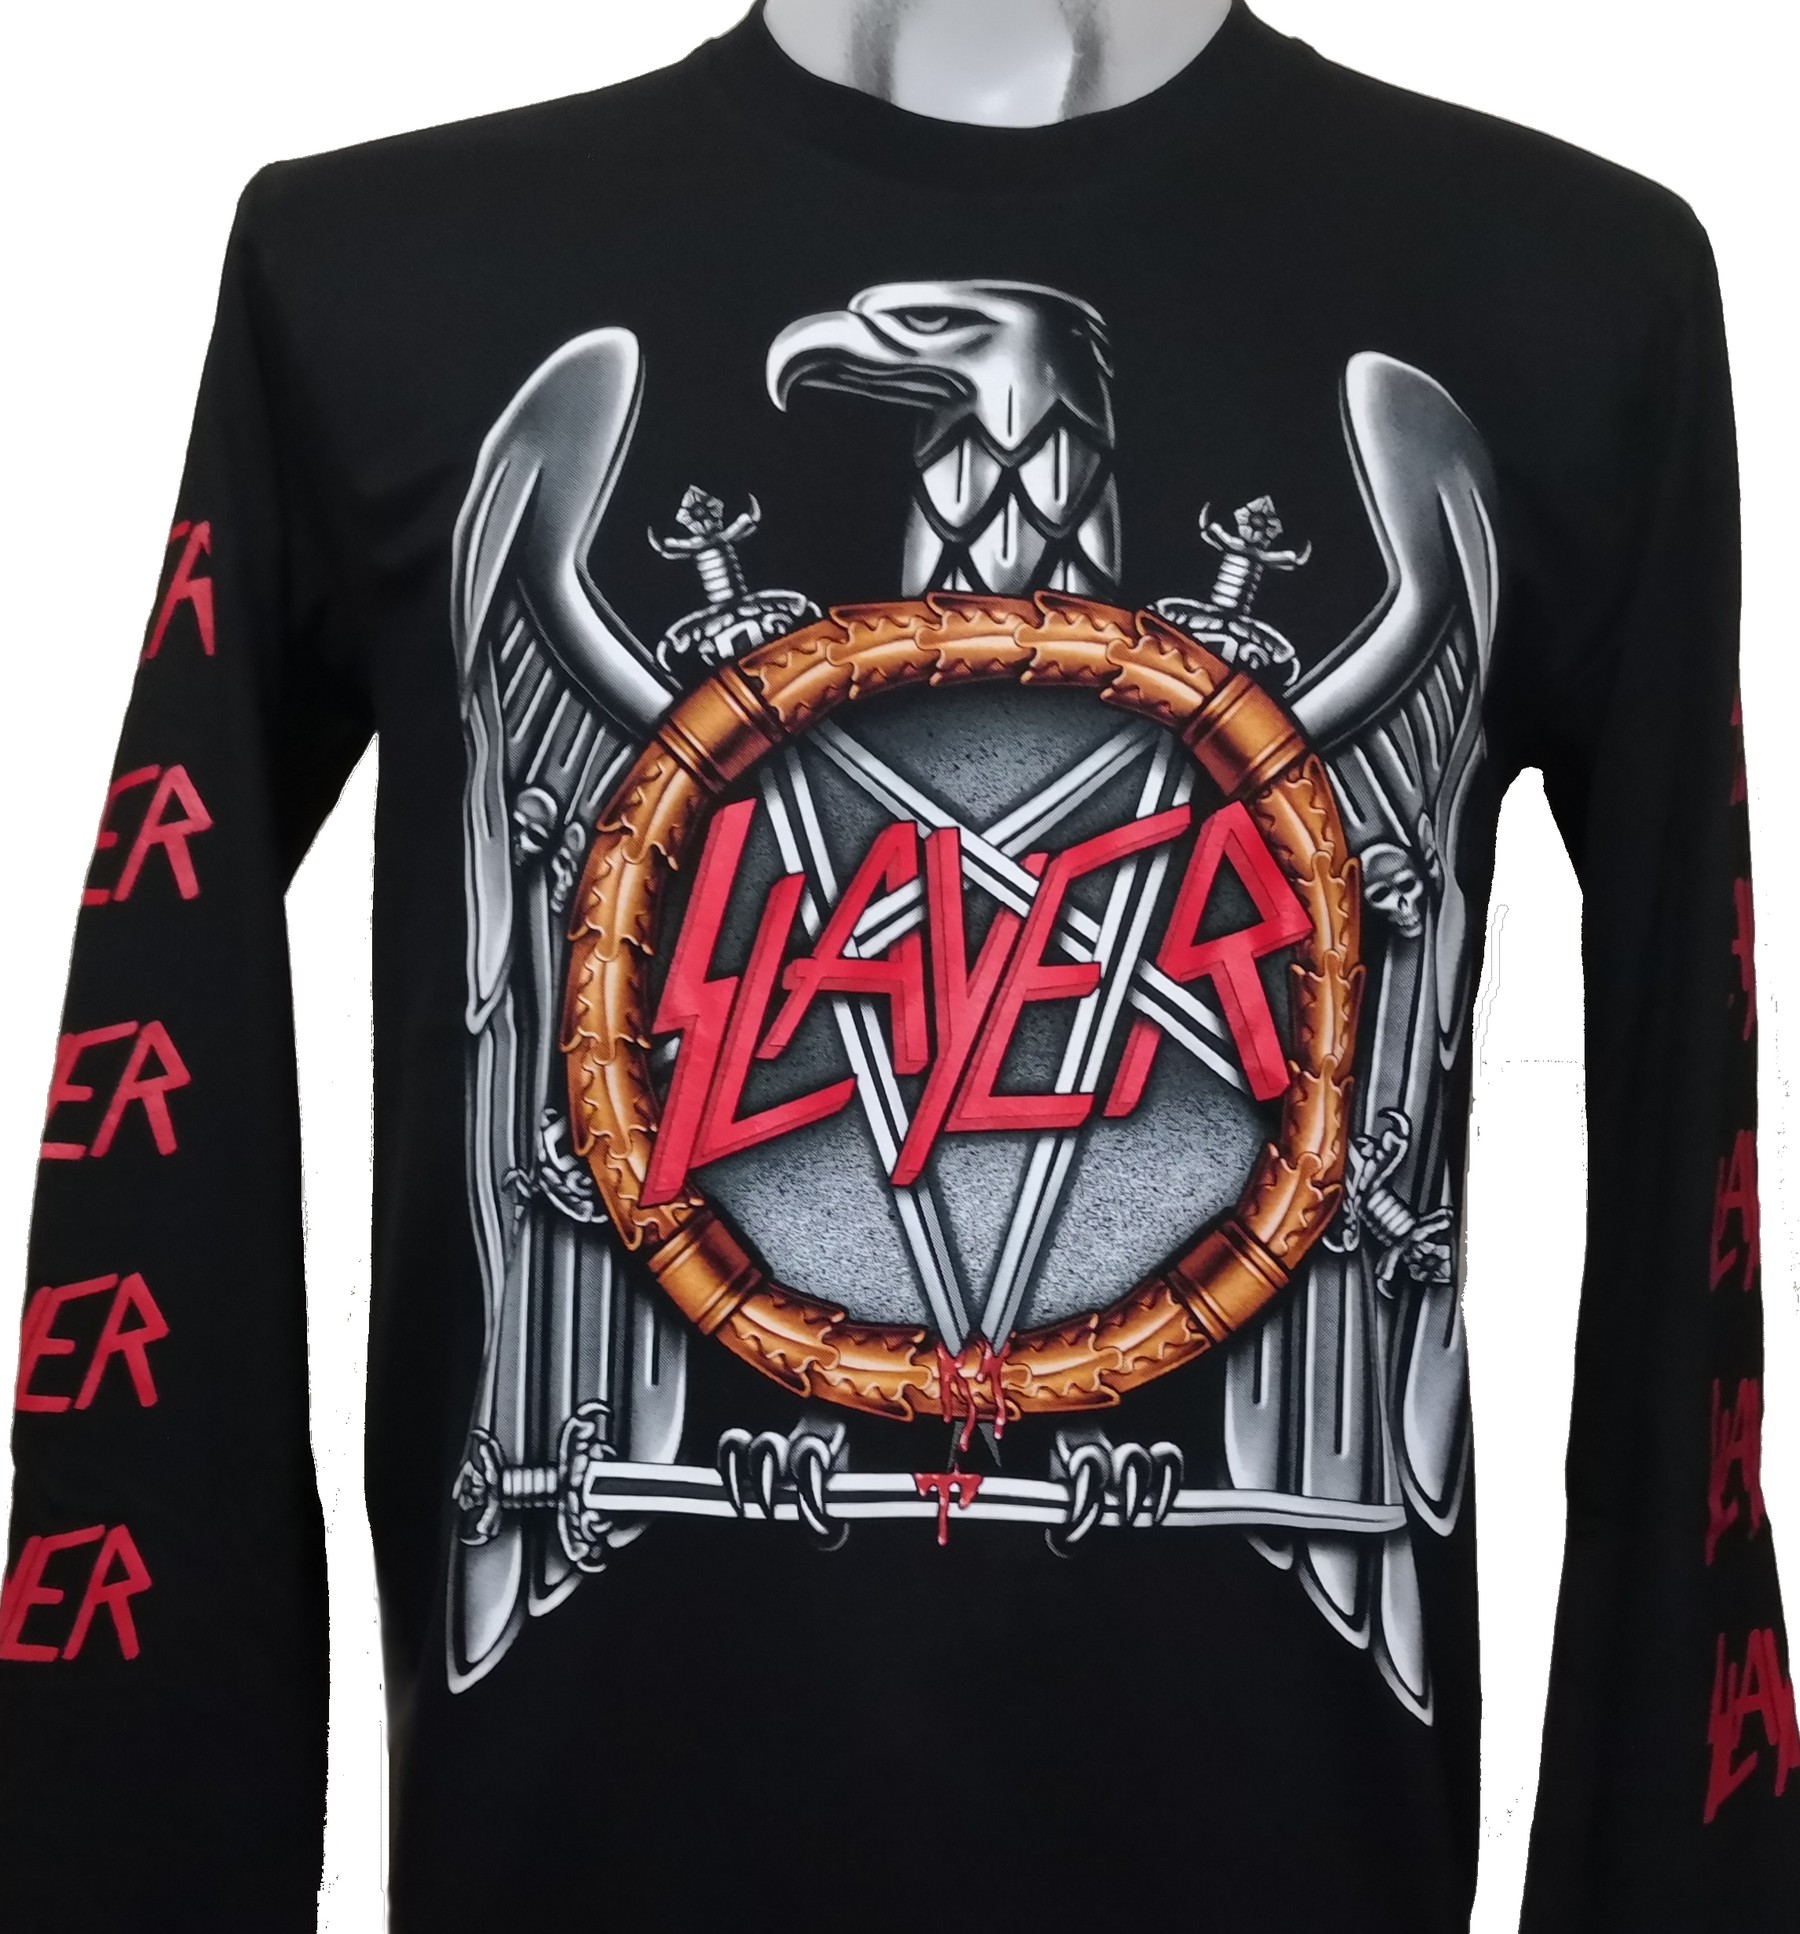 S.A. Slayer Back Patch, S.A. Slayer Logo Big Back Patch – Metal Band  T-Shirt